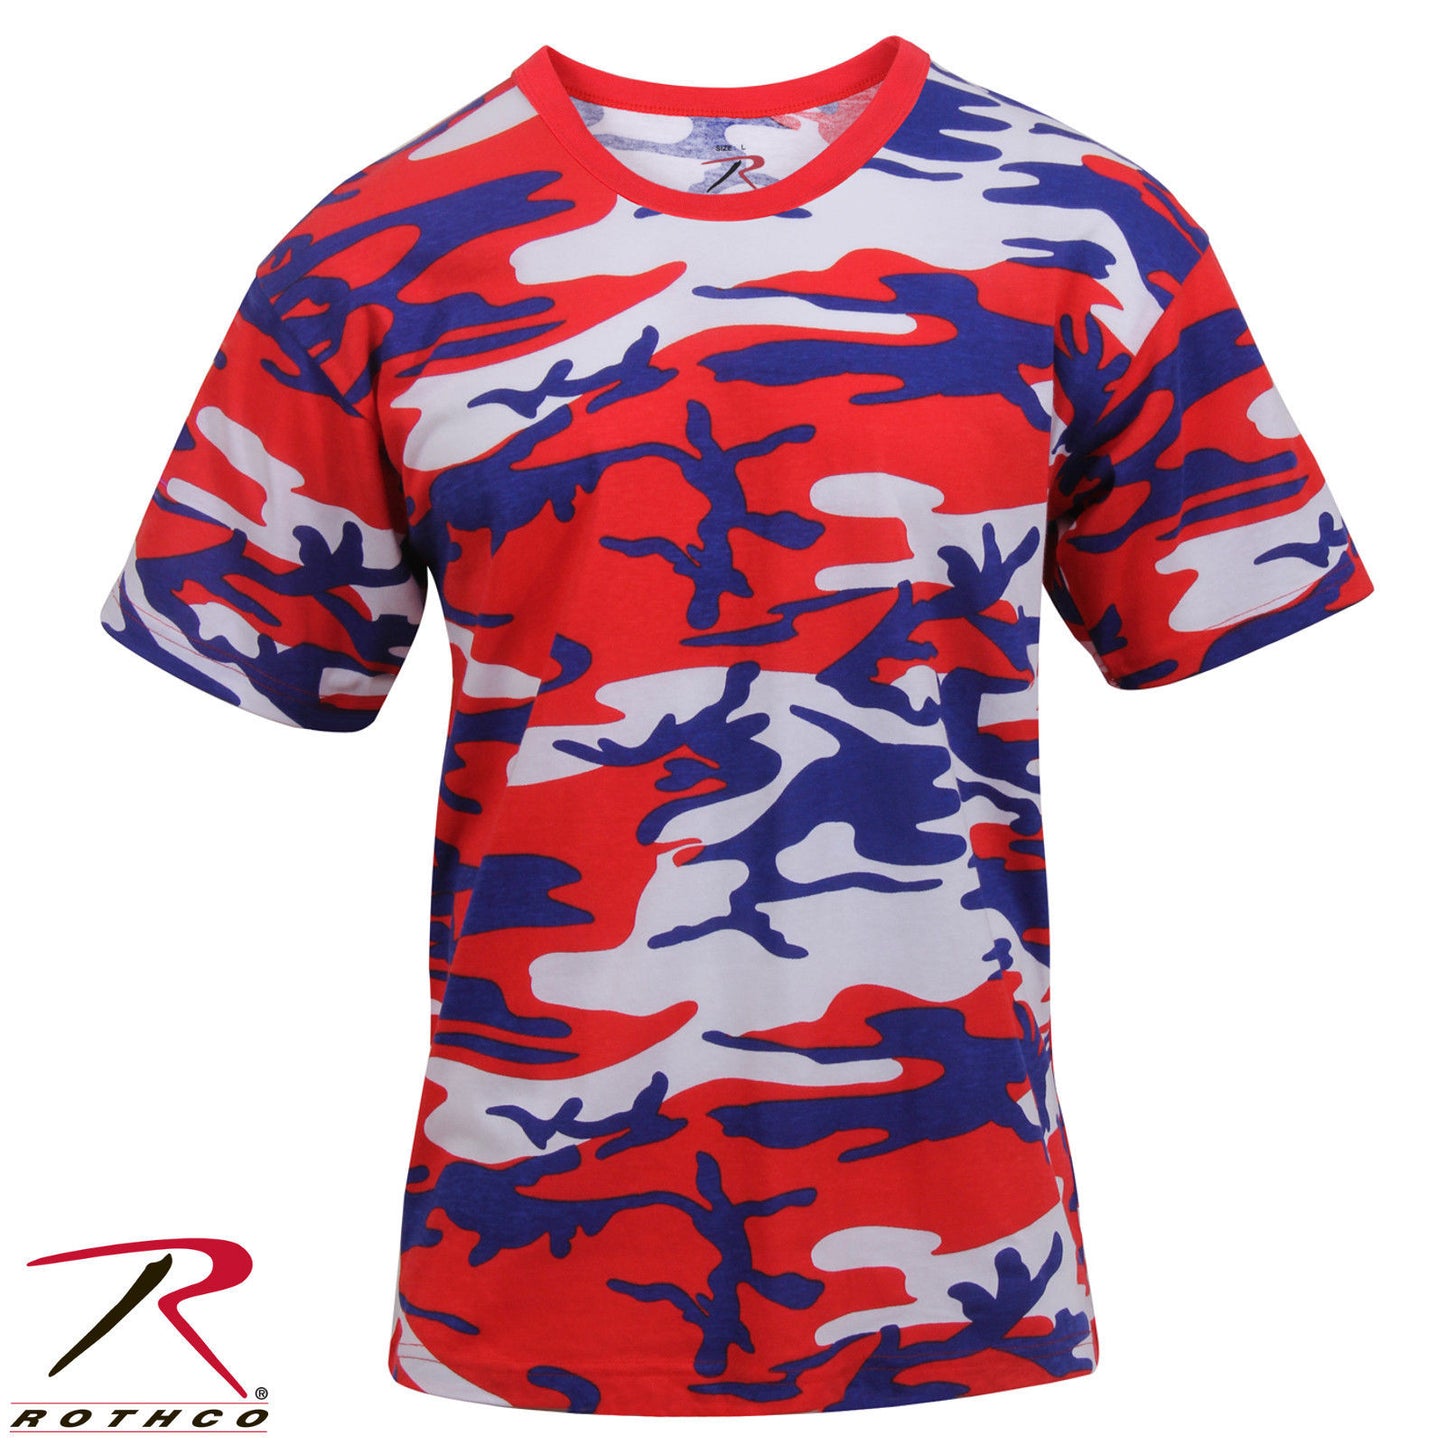 Men's American Camo Short Sleeve T-Shirt - Rothco Red White Blue